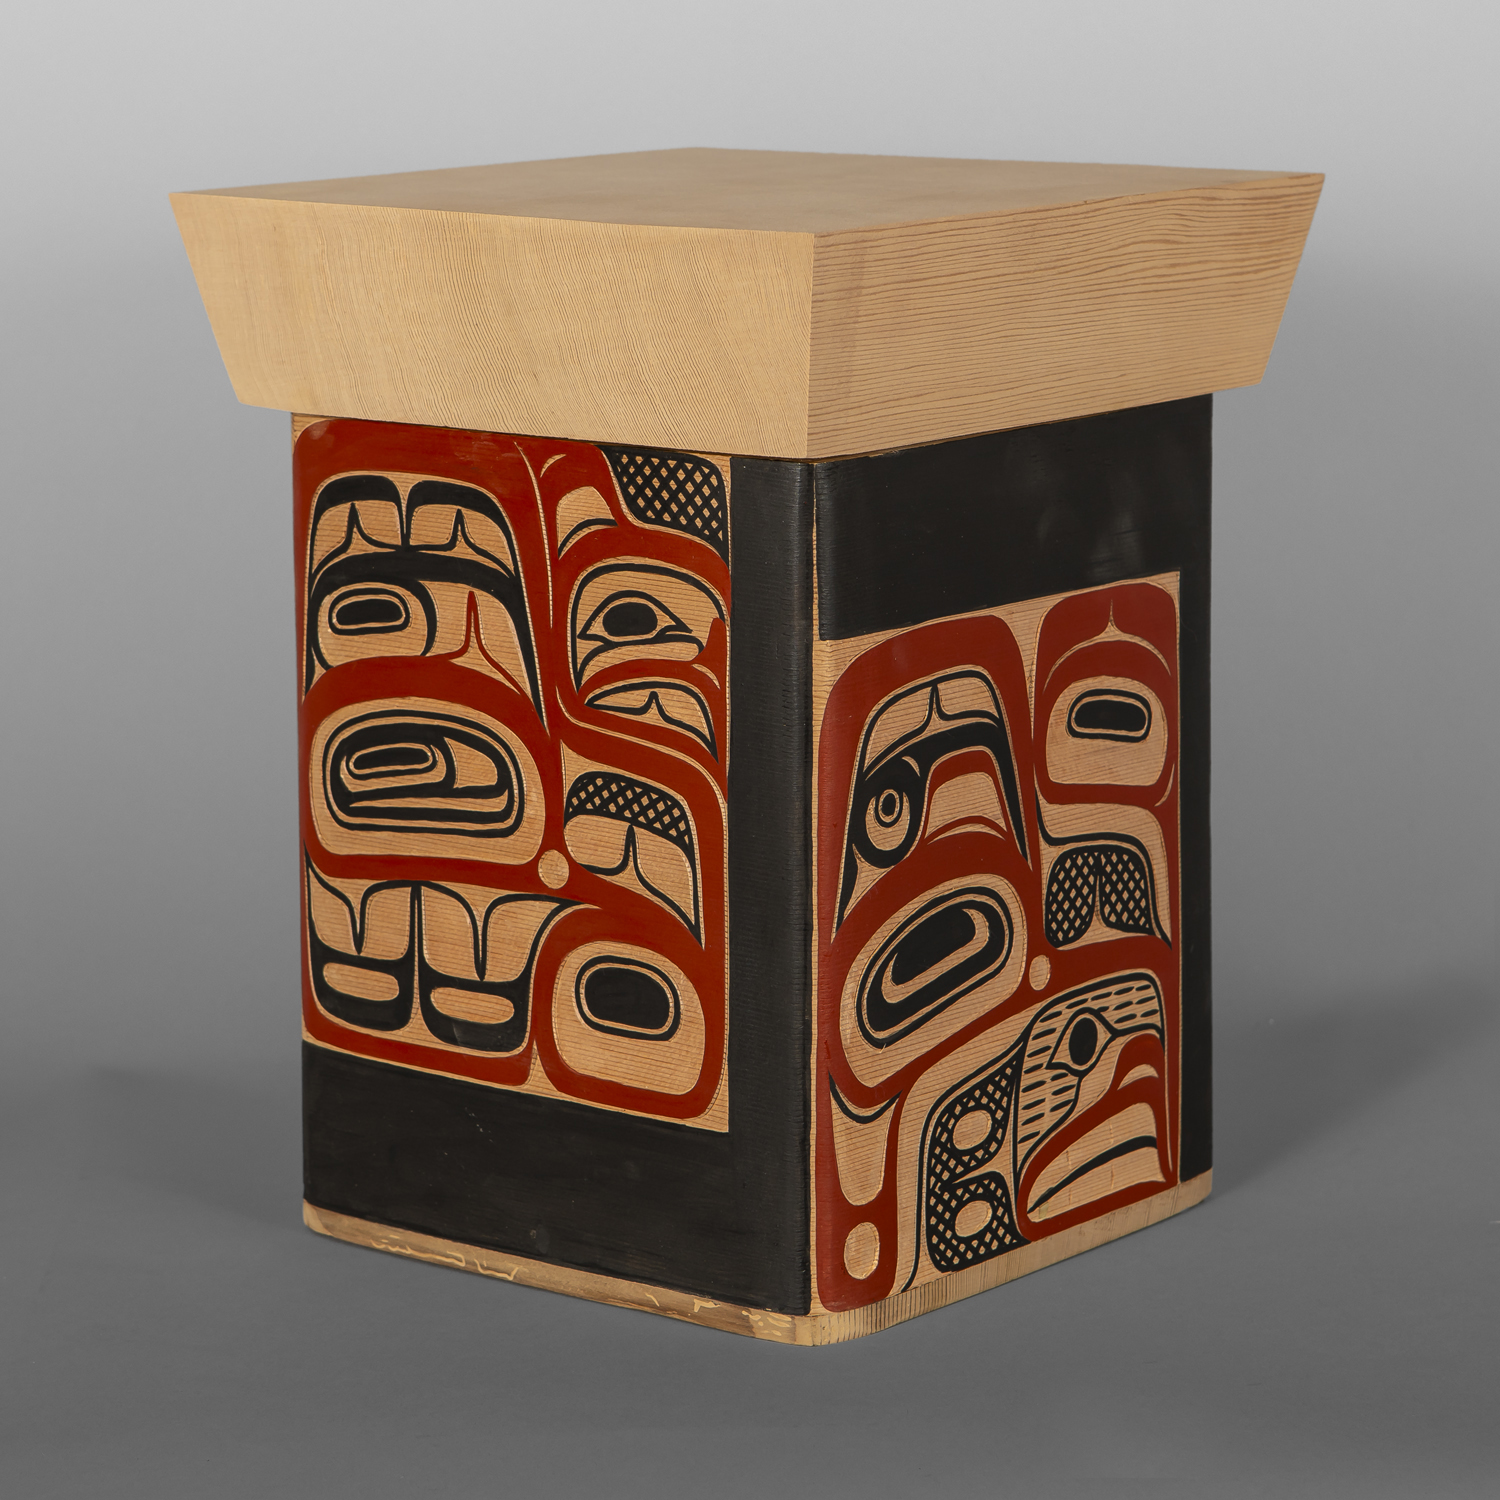 Four Eagles Bentwood Box
David A Boxley
Tsimshian
Red cedar, paint
12½" x 10" x 10"
$4000